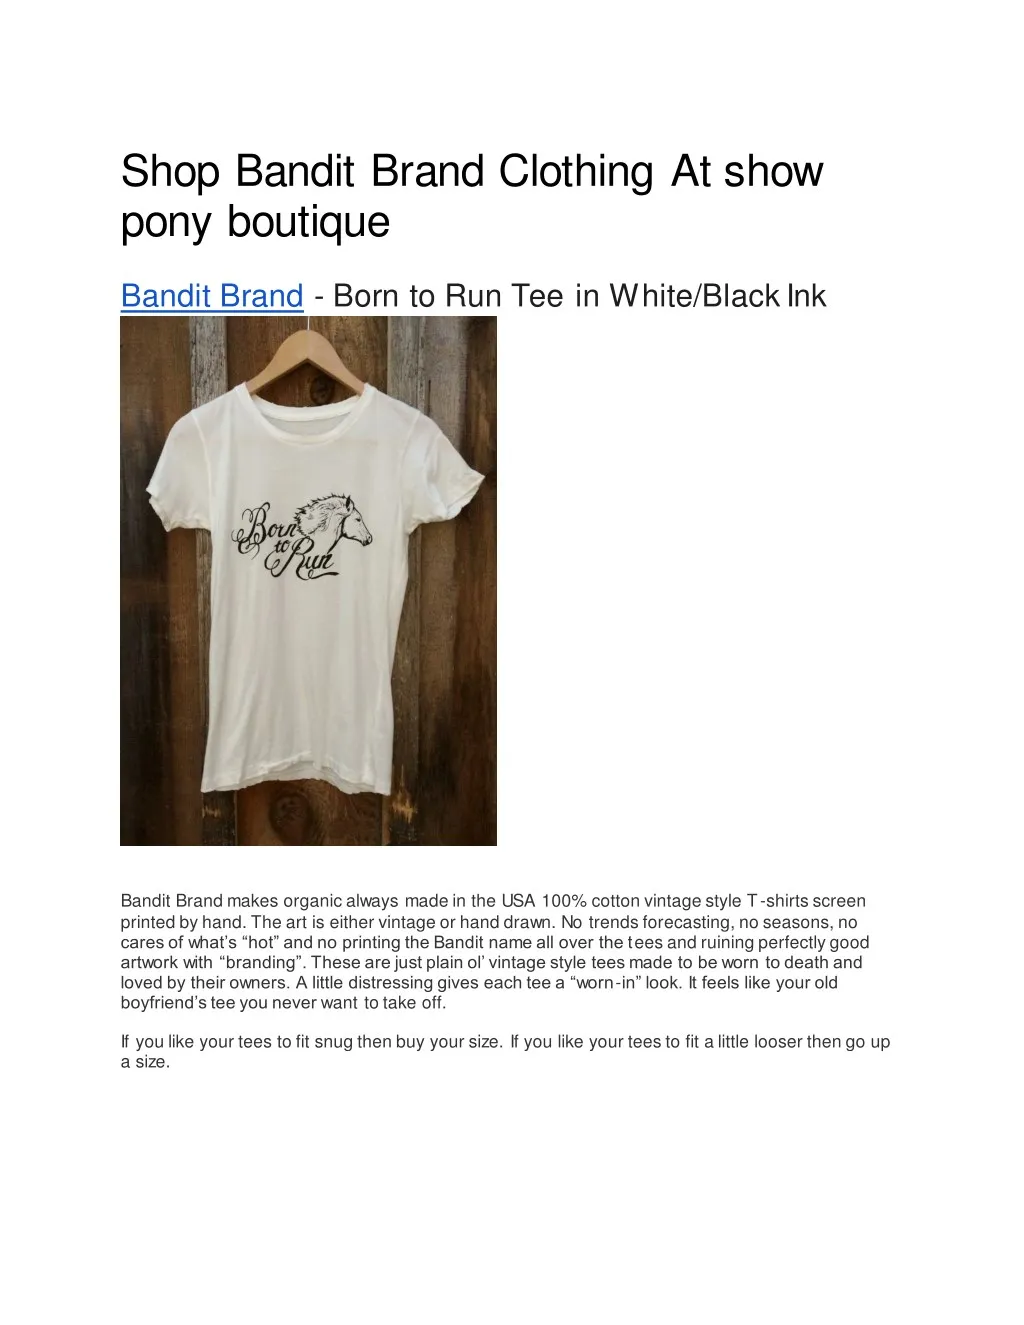 shop bandit brand clothing at show pony boutique